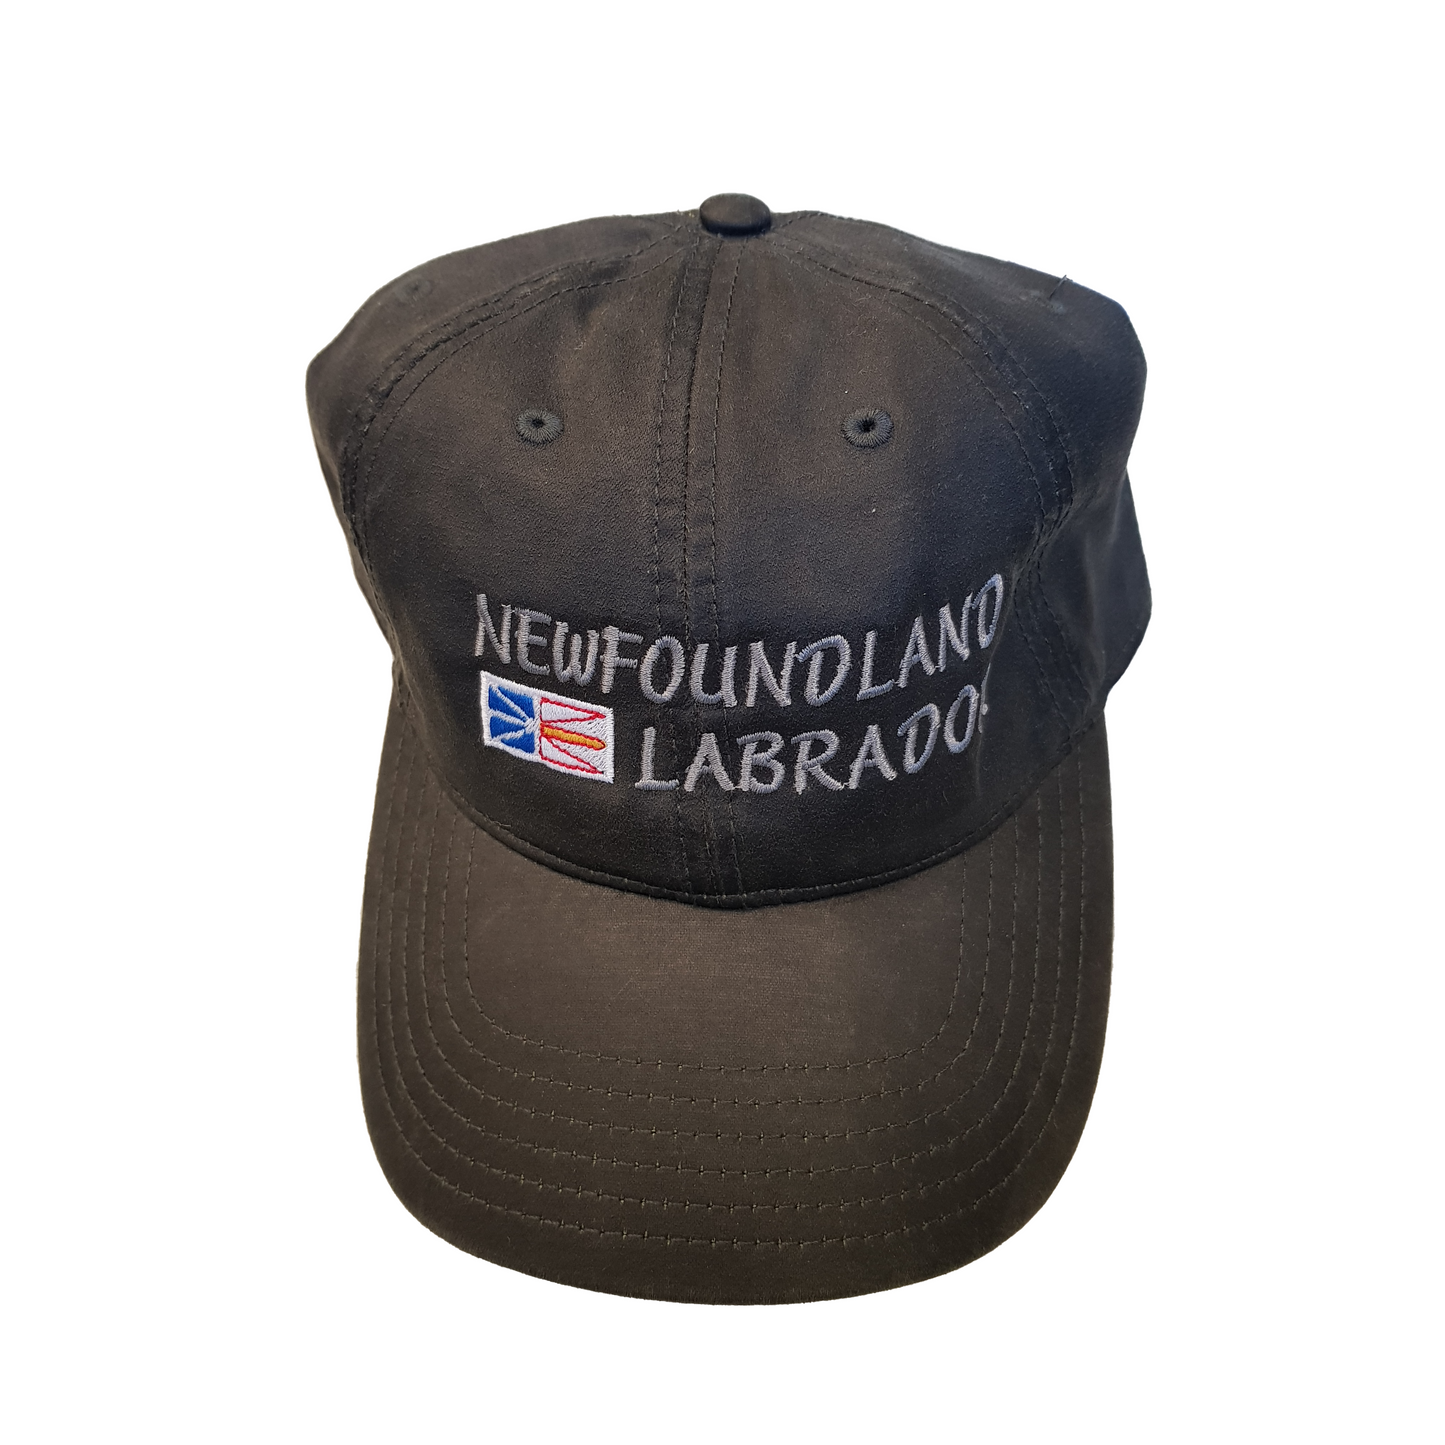 Newfoundland Souvenir Hats - Assorted Designs